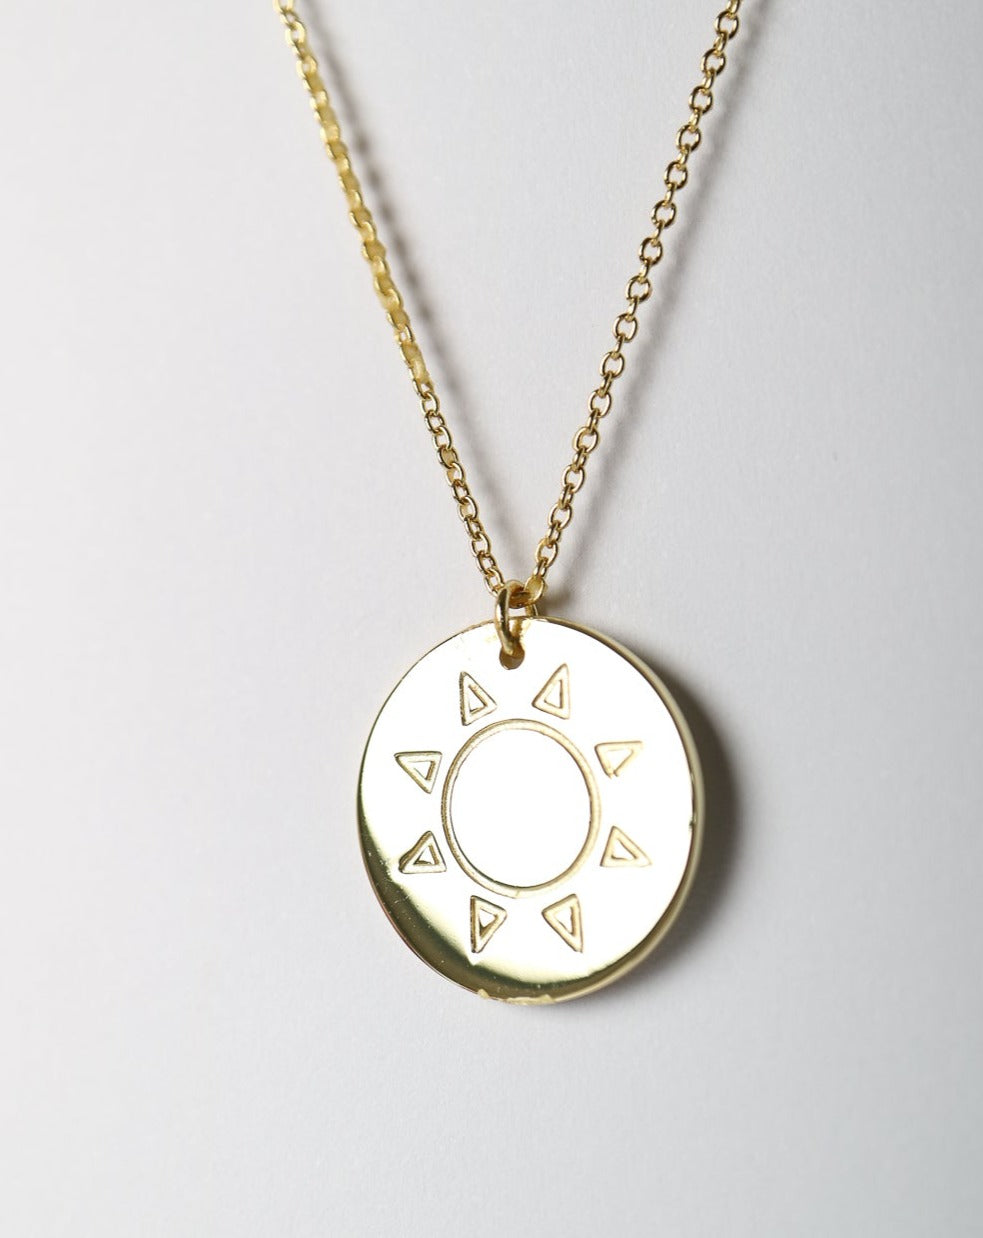 Soleil Medallion Necklace in gold